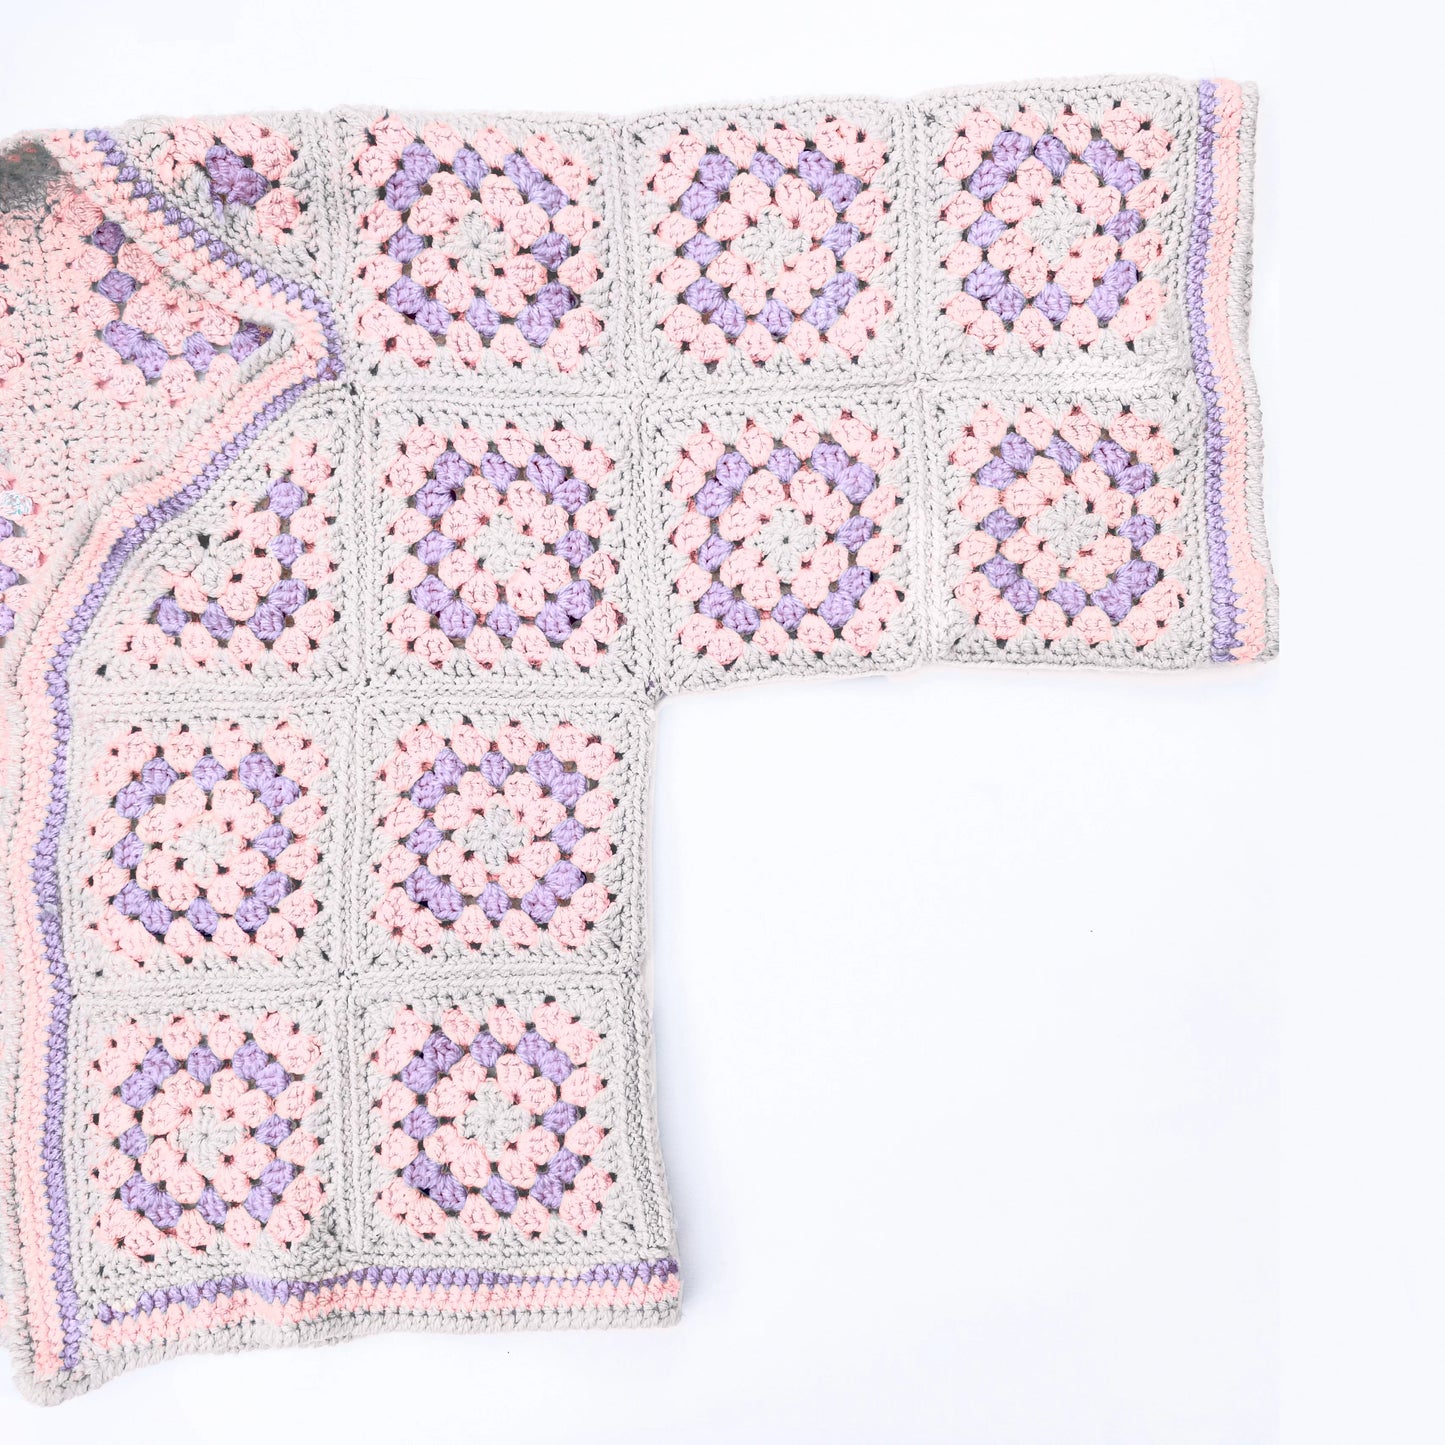 Granny Squares for Beginners Crochet Workshop, Marlborough, 6th April